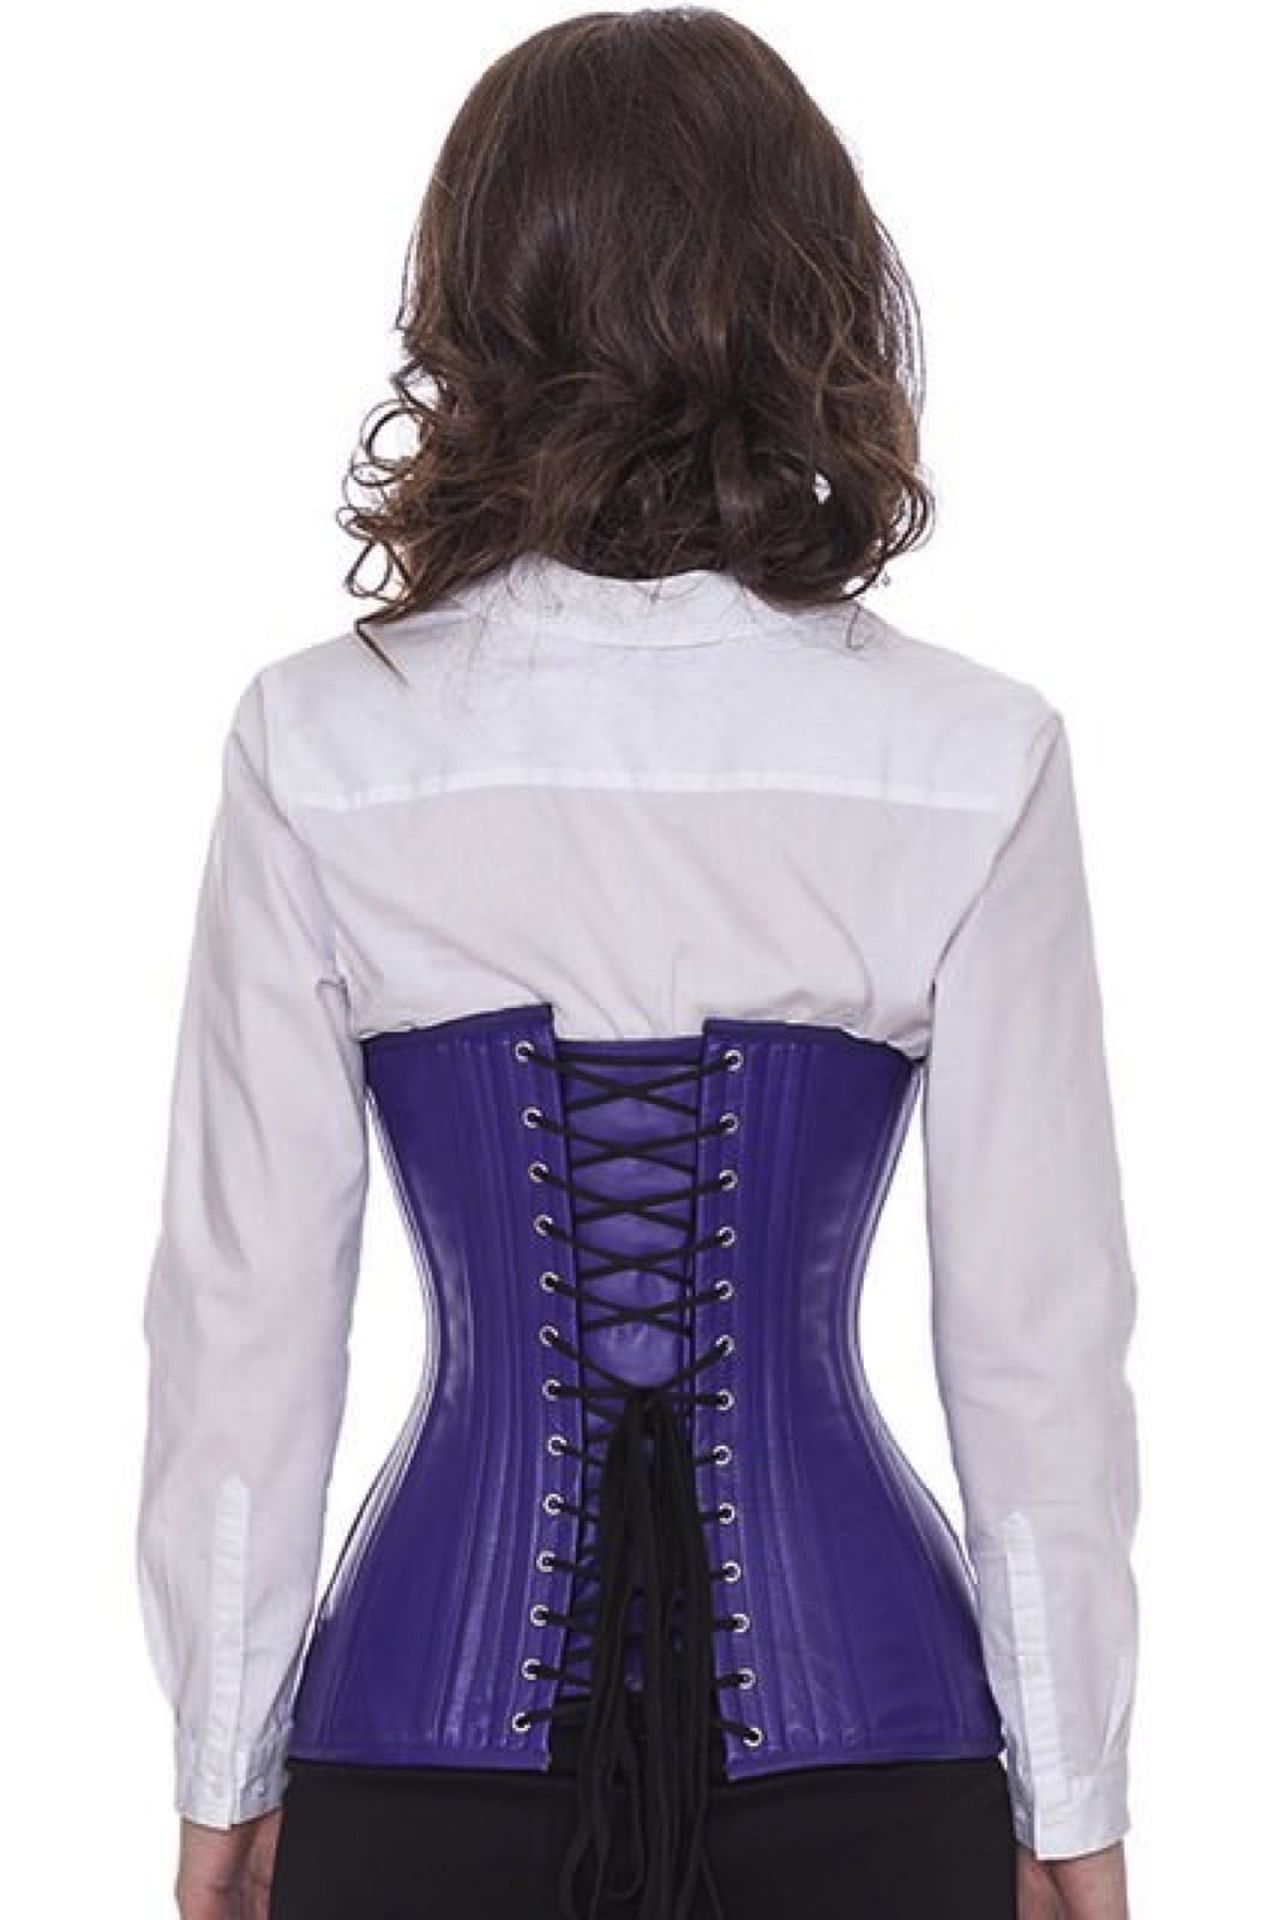 Corse violeta cuero bajo pecho ondeado corset ln32